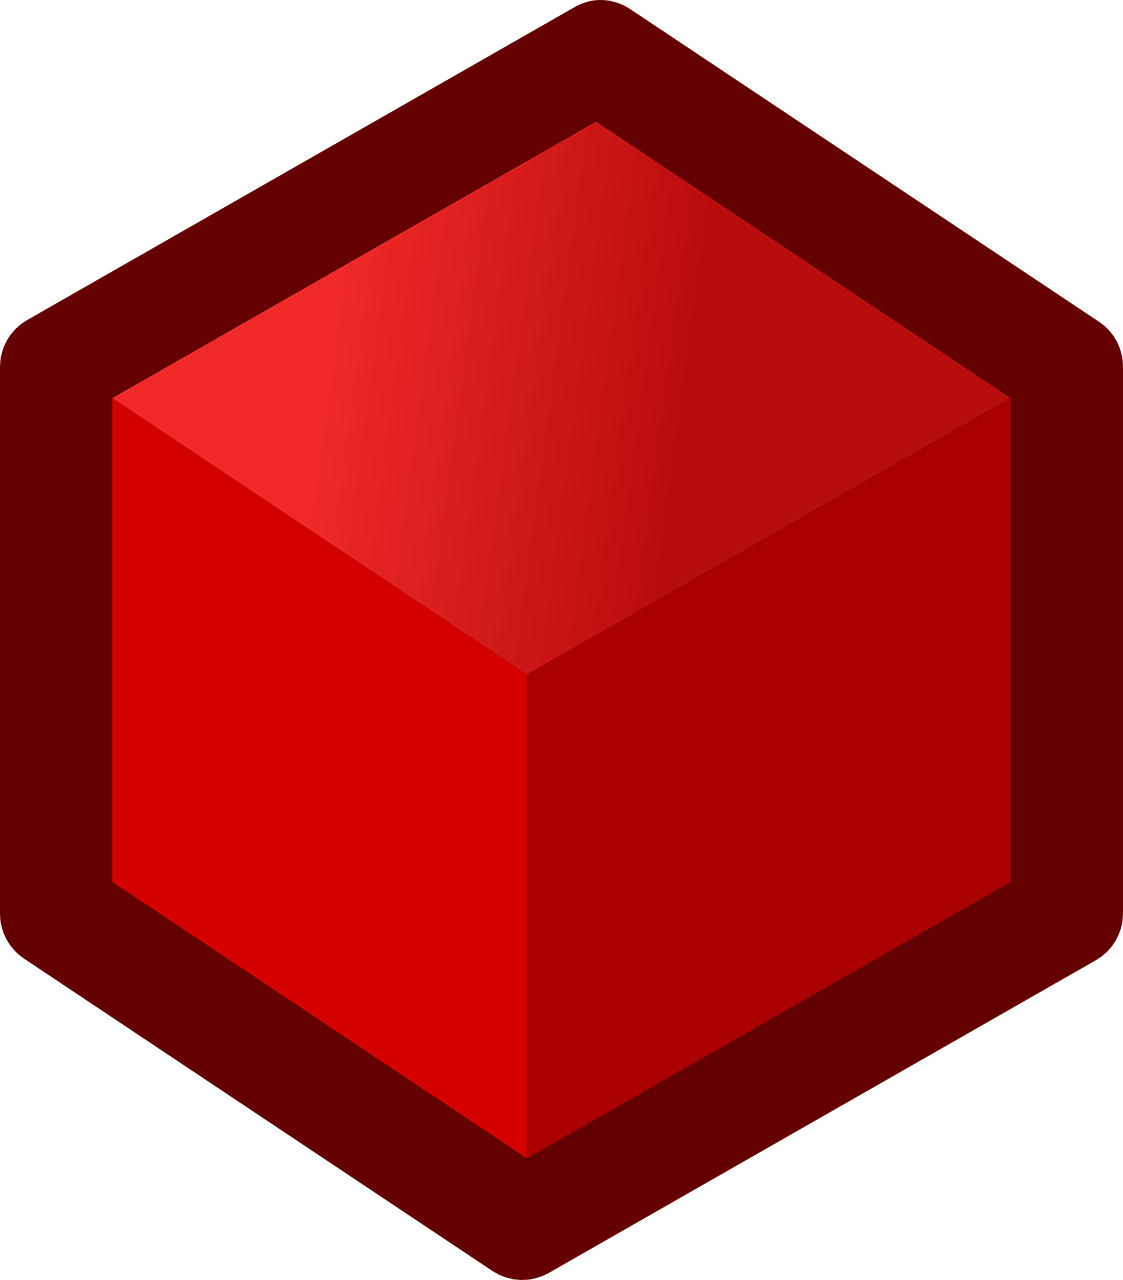 cube box shape free photo